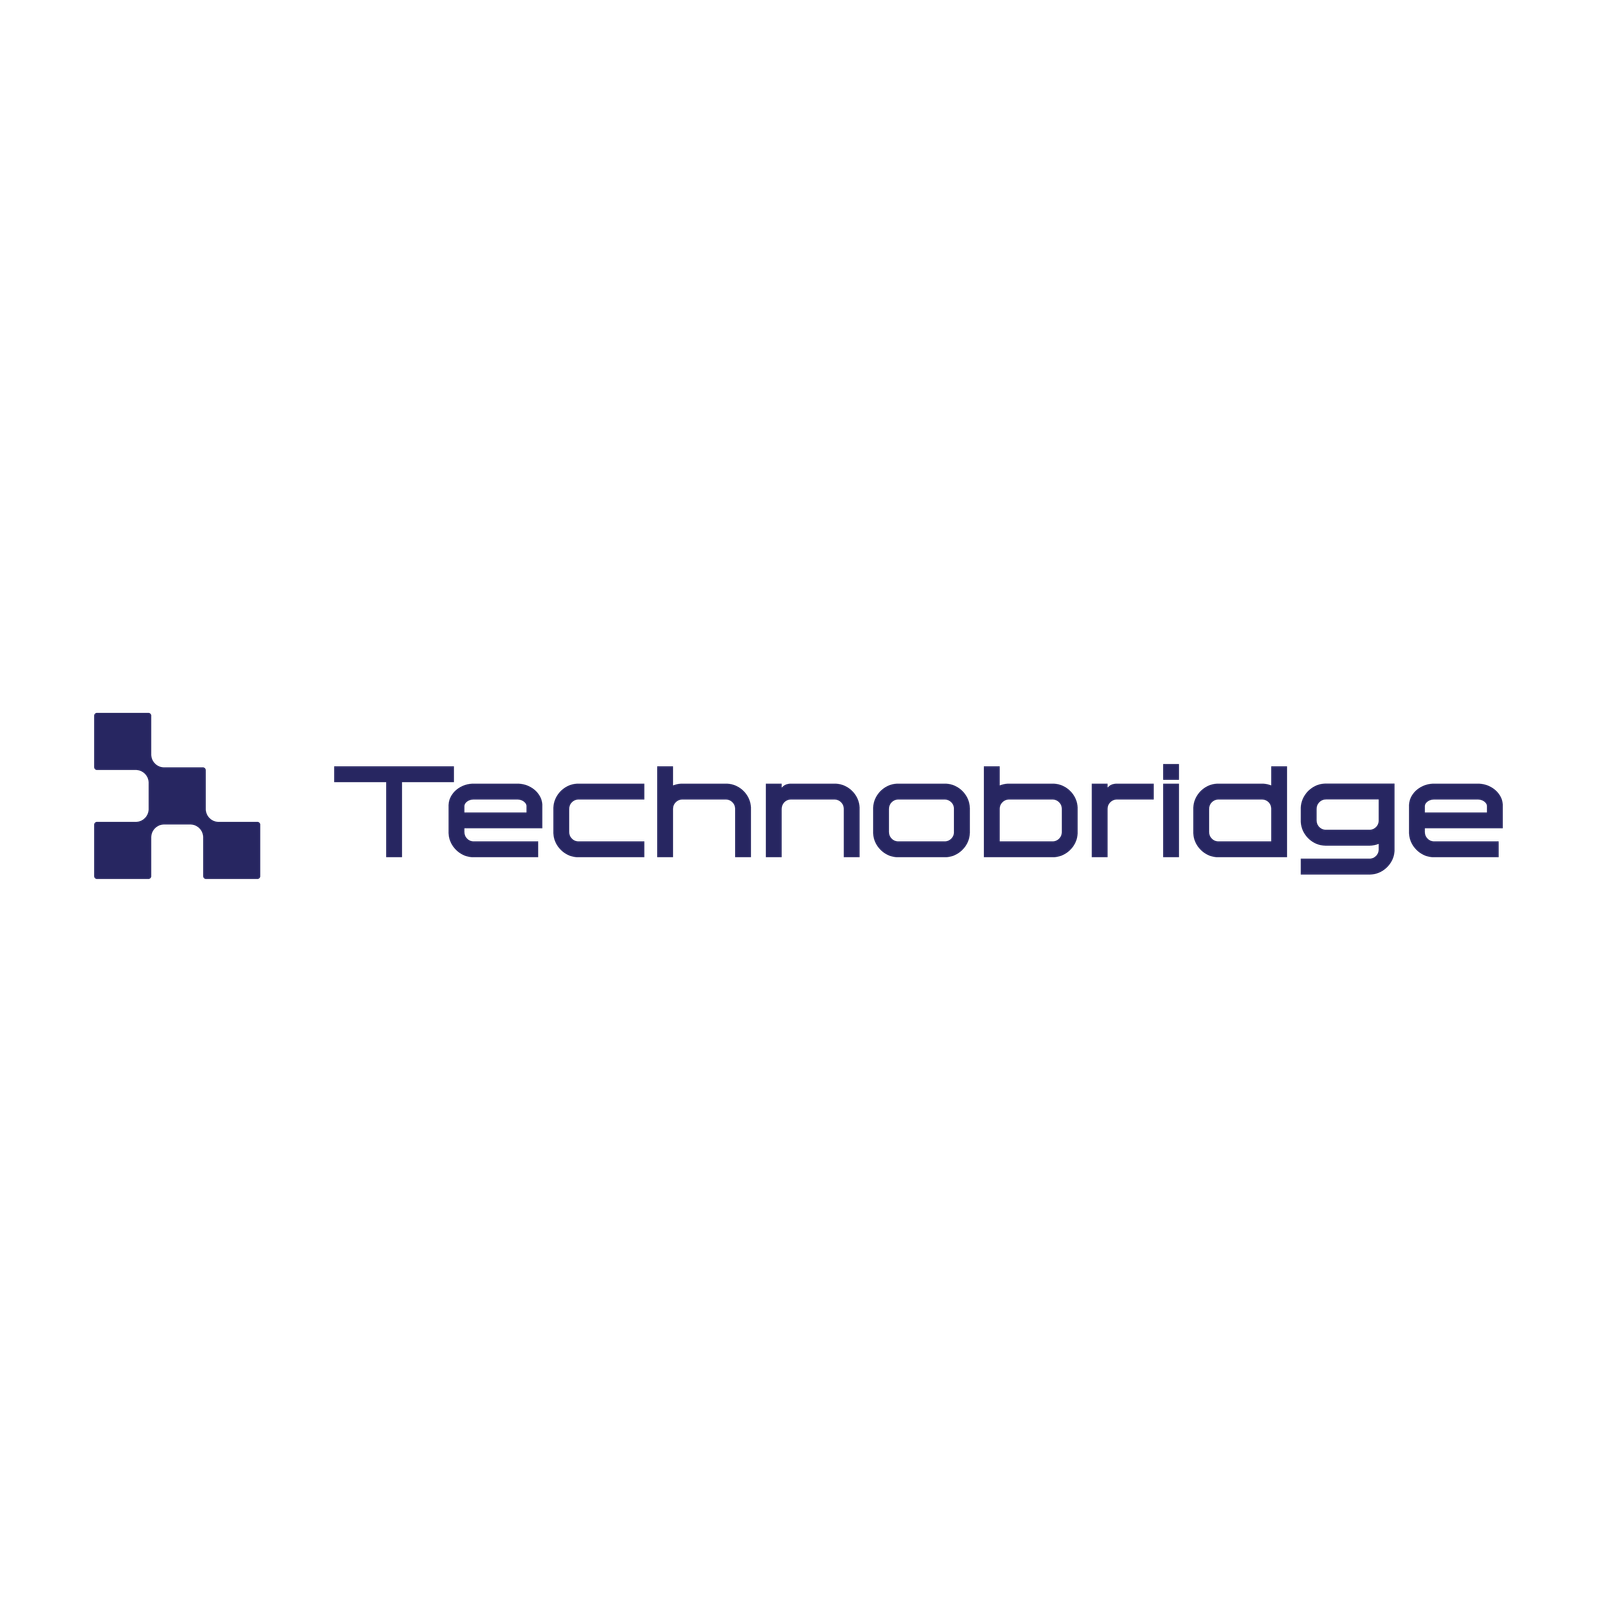 Technobridge